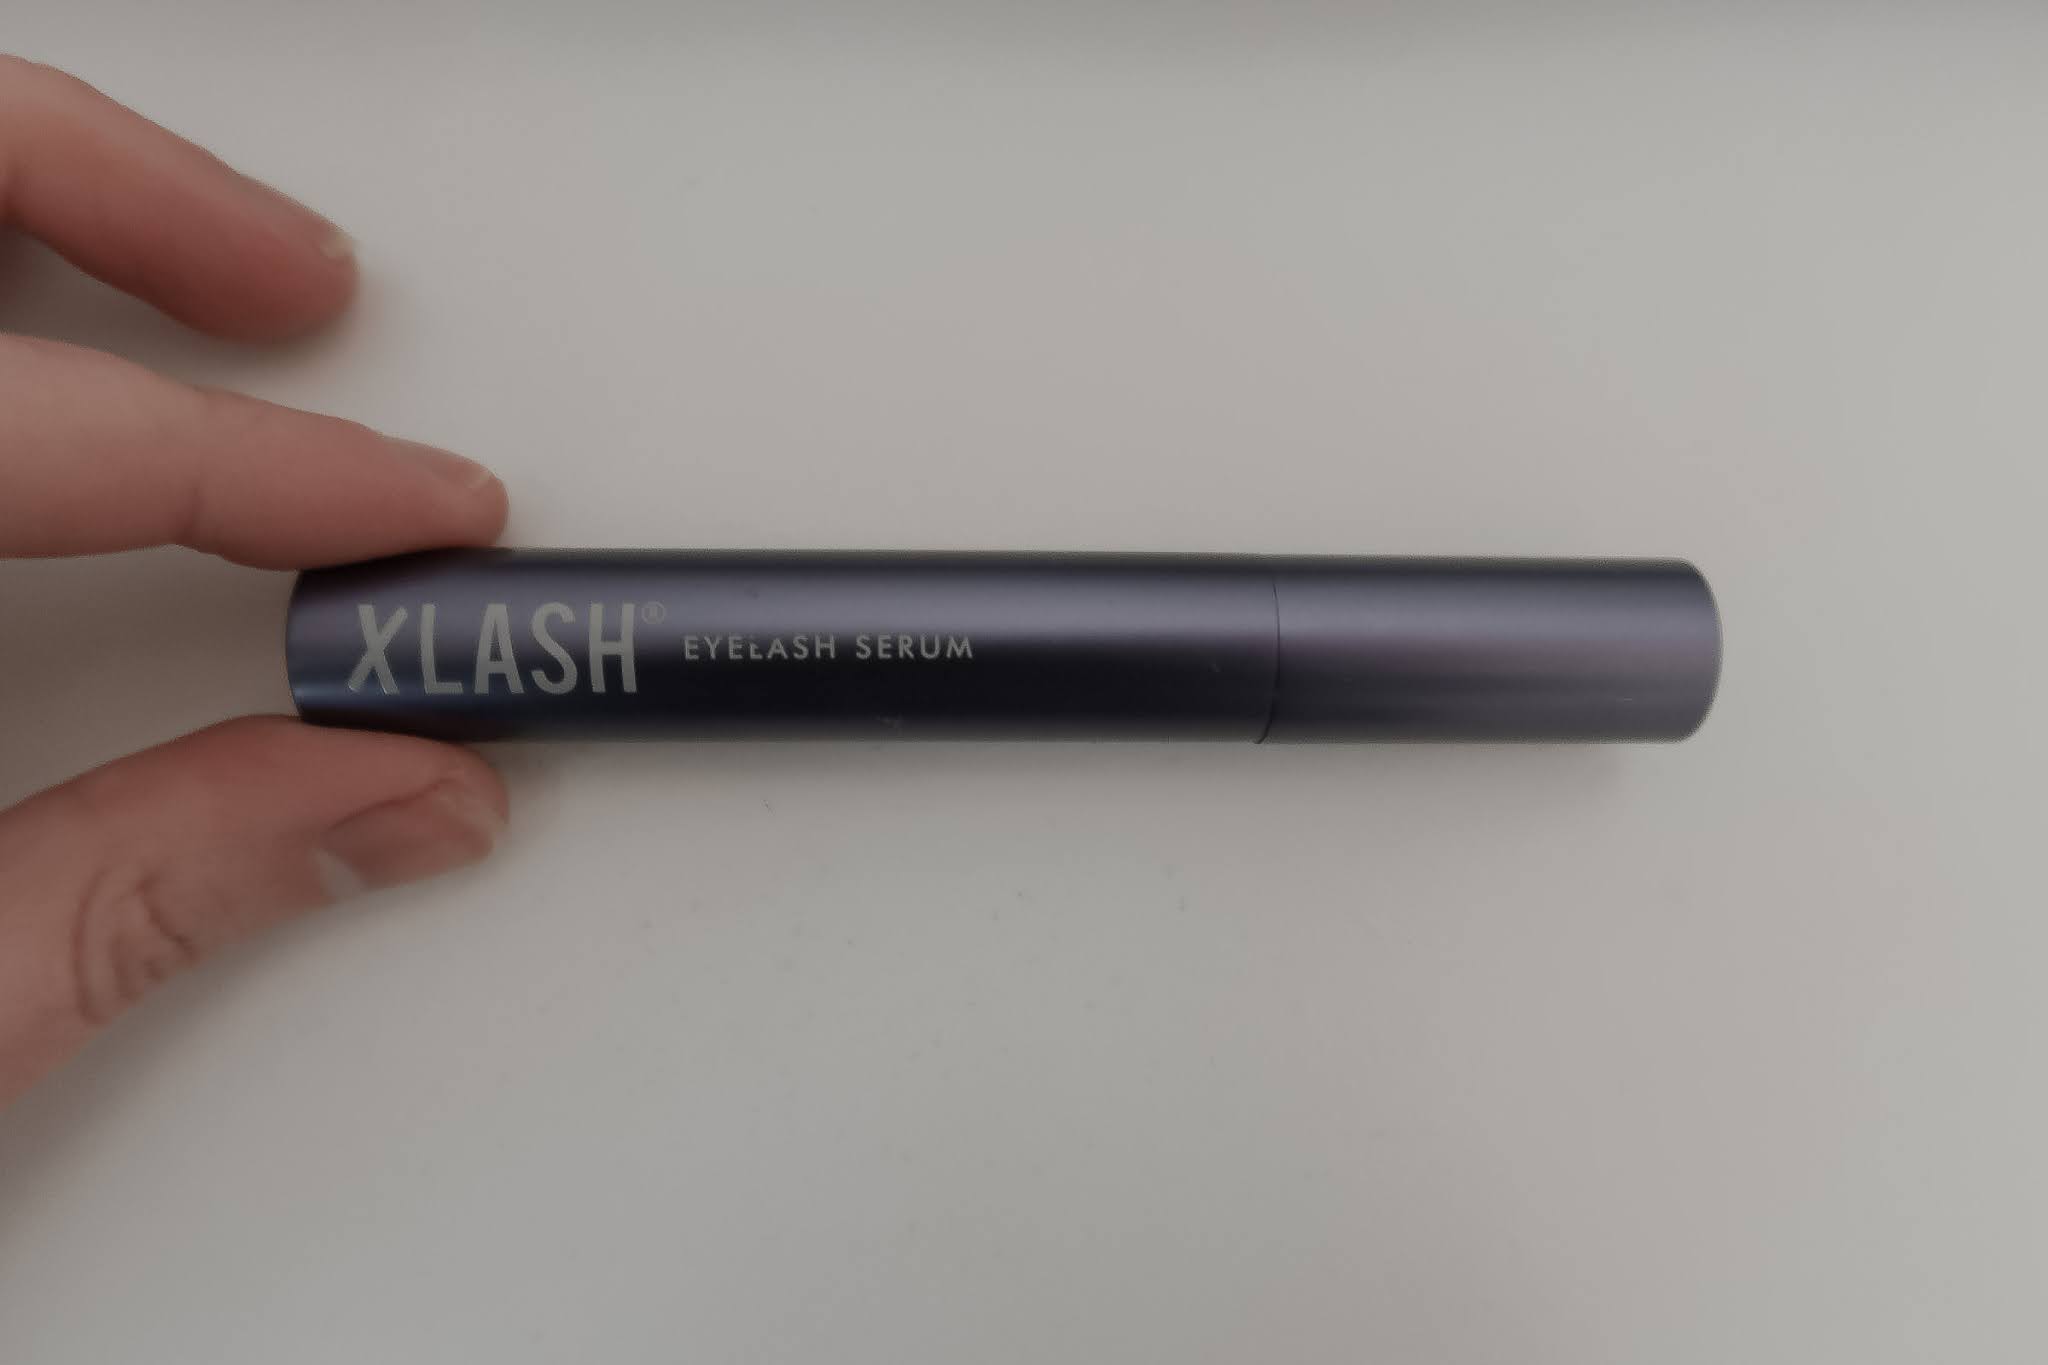 Xlash Eyelash Serum: A Review